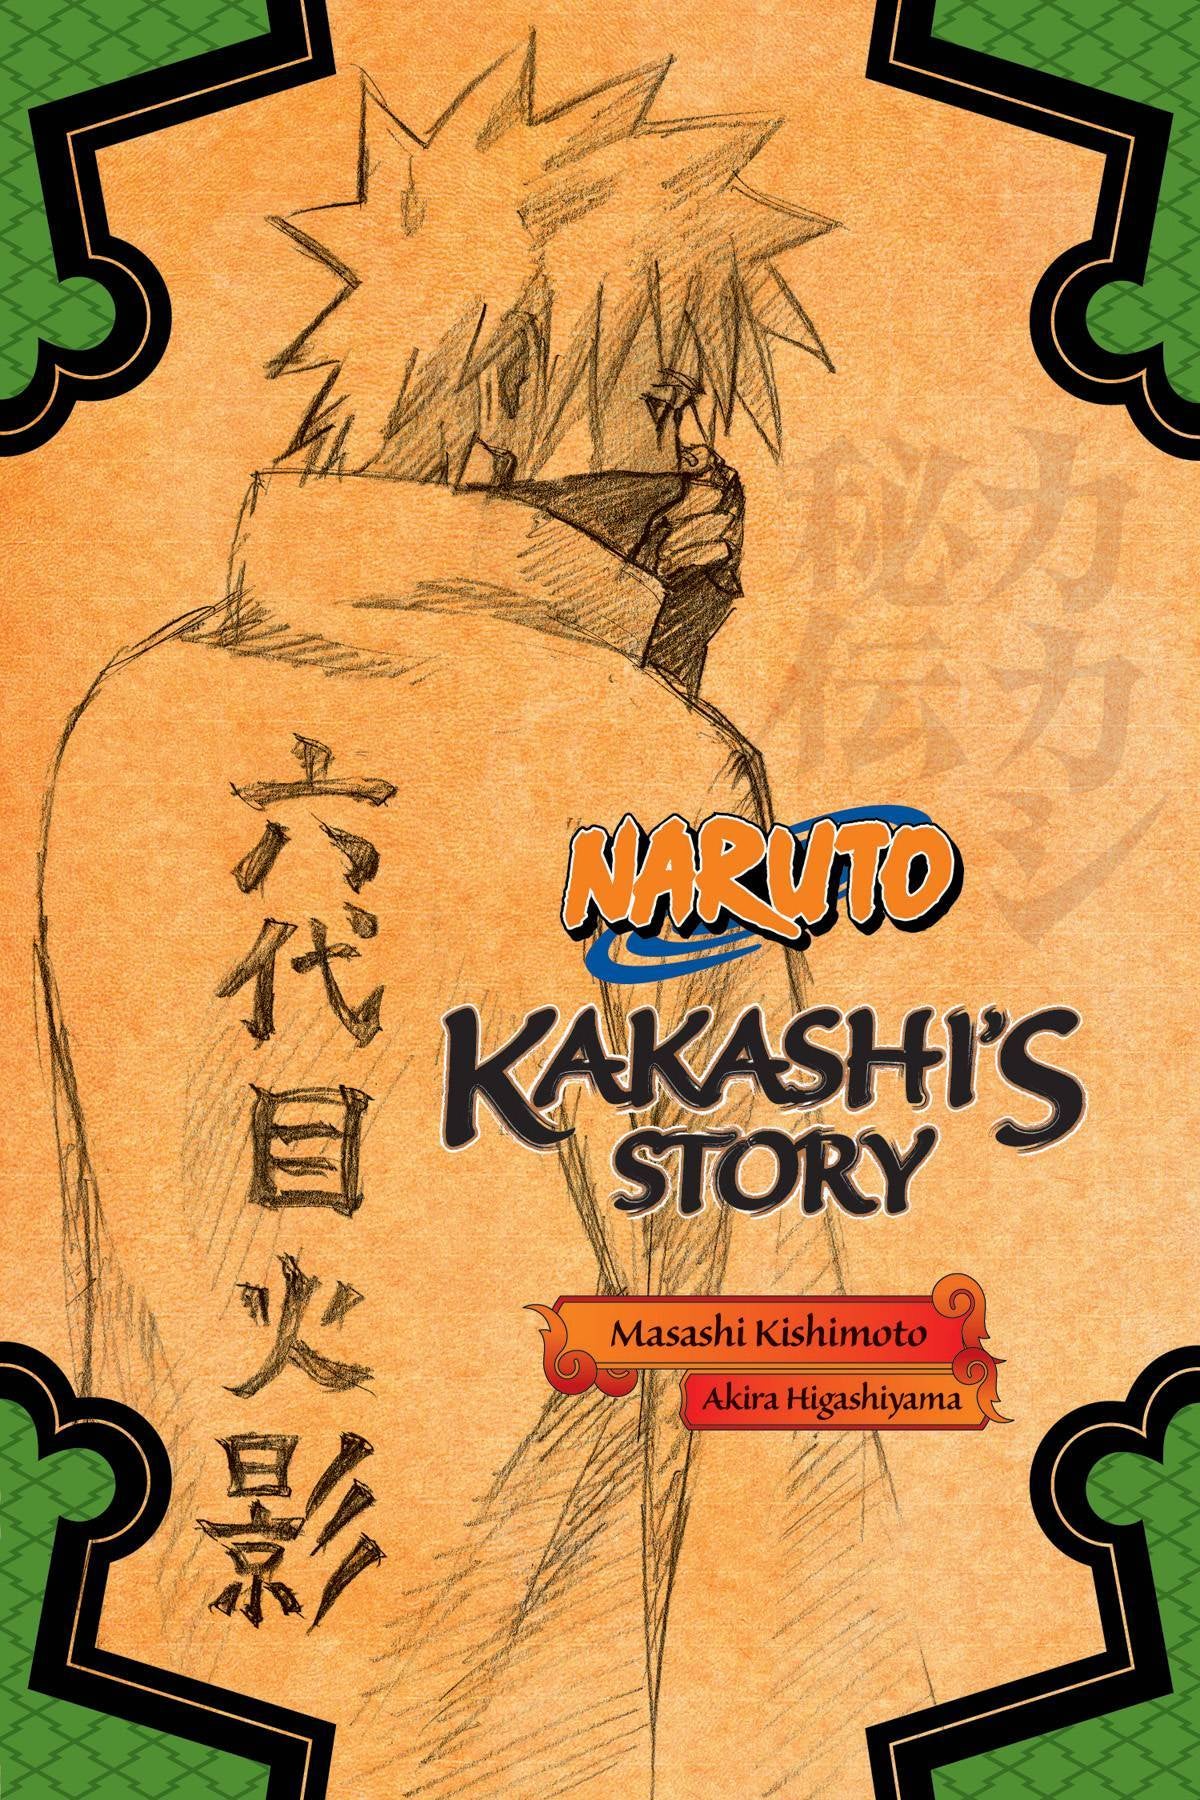 NARUTO KAKASHI'S STORY NOVEL